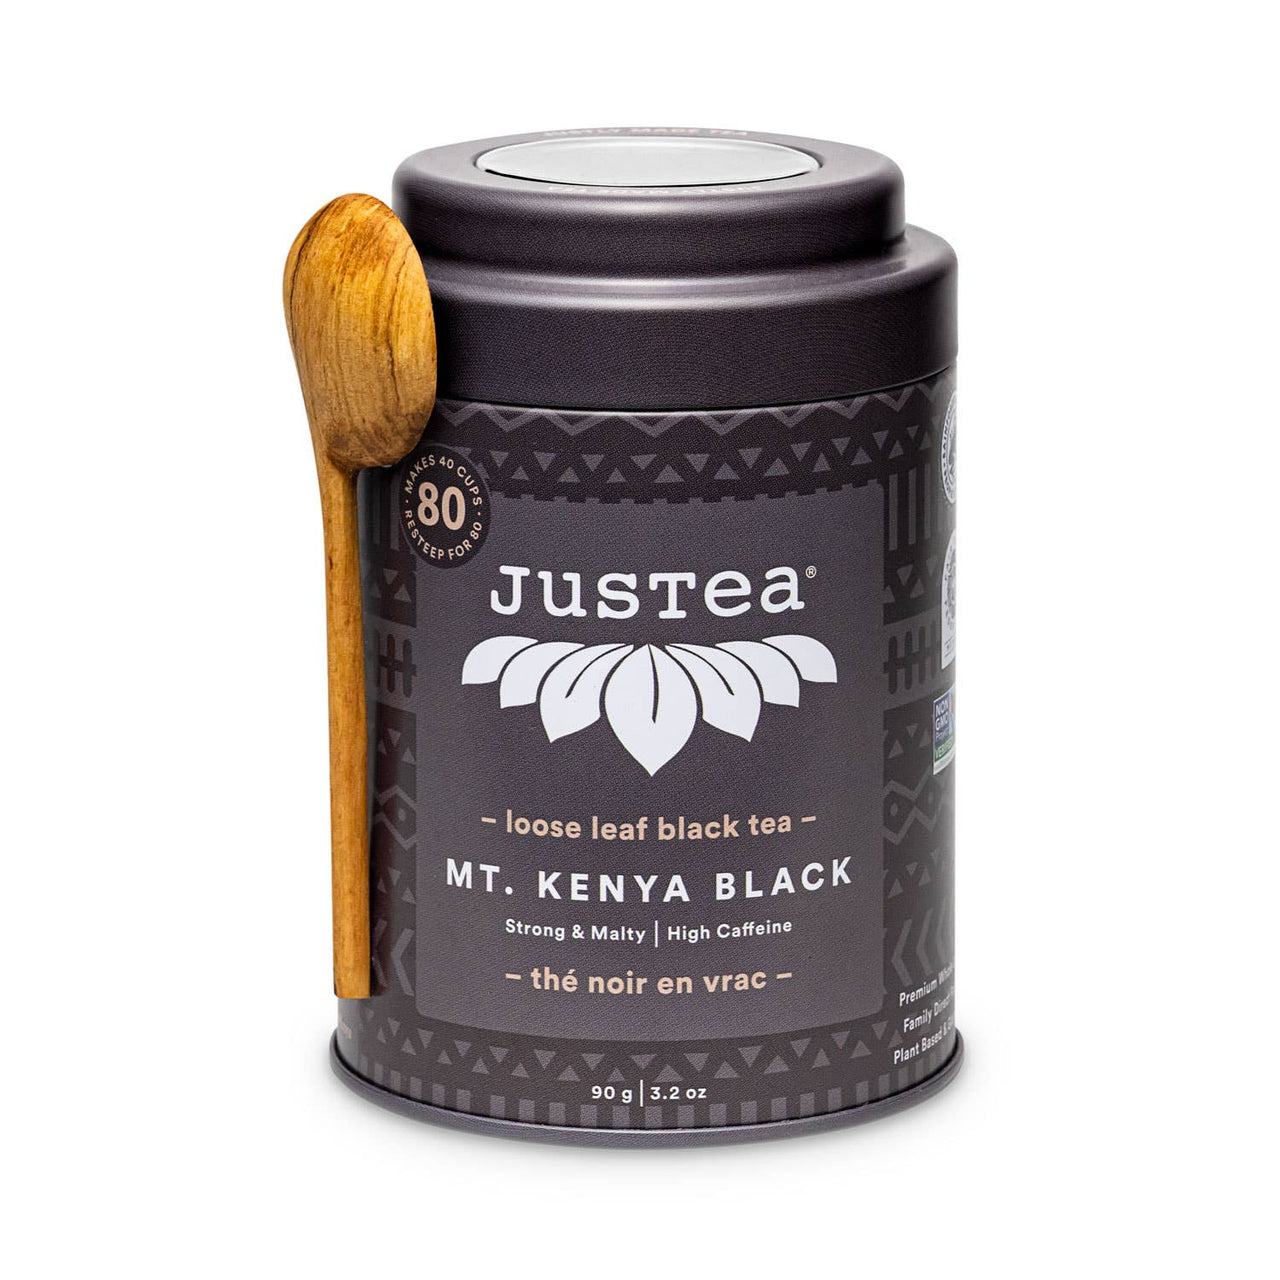 Mt Kenya Black Tin & Spoon - Organic, Fair-Trade Black Tea  JusTea   